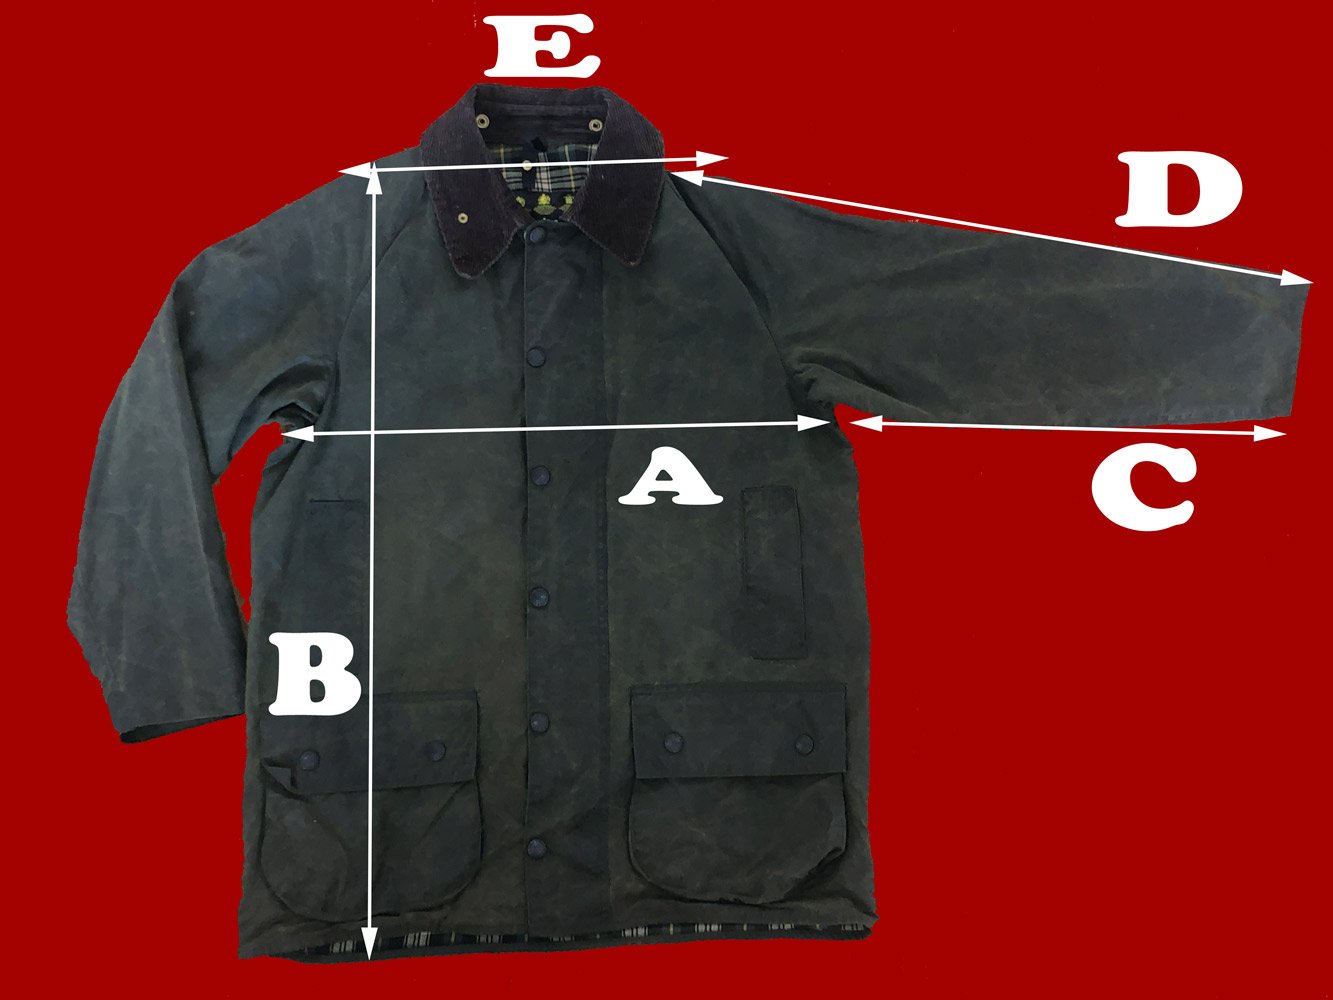 Barbour International nero uomo Large C42/107cm - Black Wax International Jacket C42 Size L